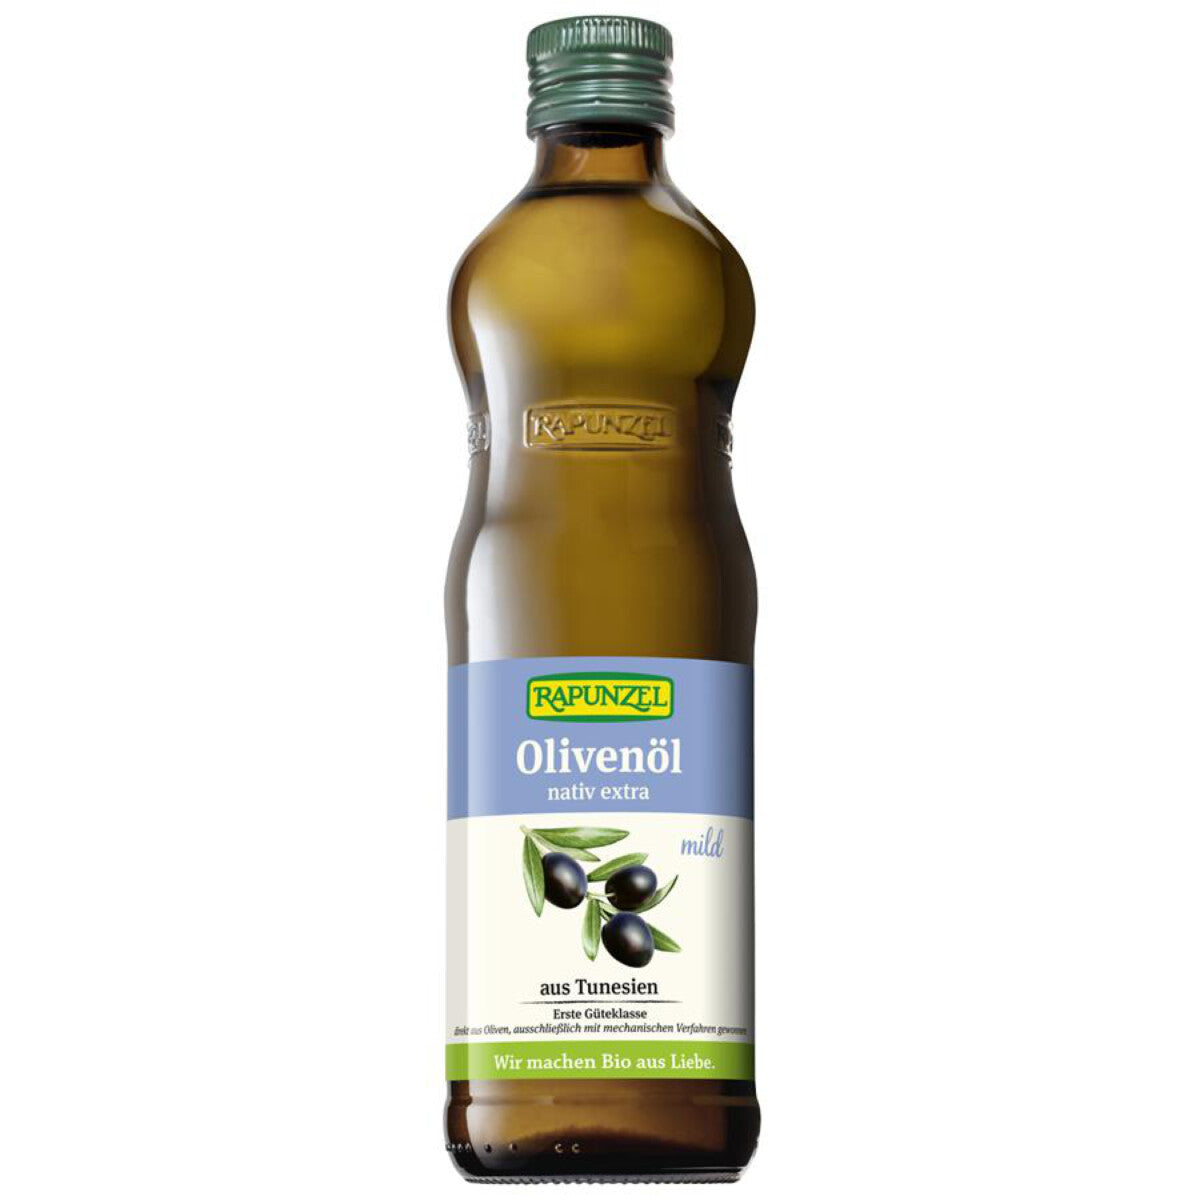 RAPUNZEL Olivenöl nativ extra mild - 500 ml 